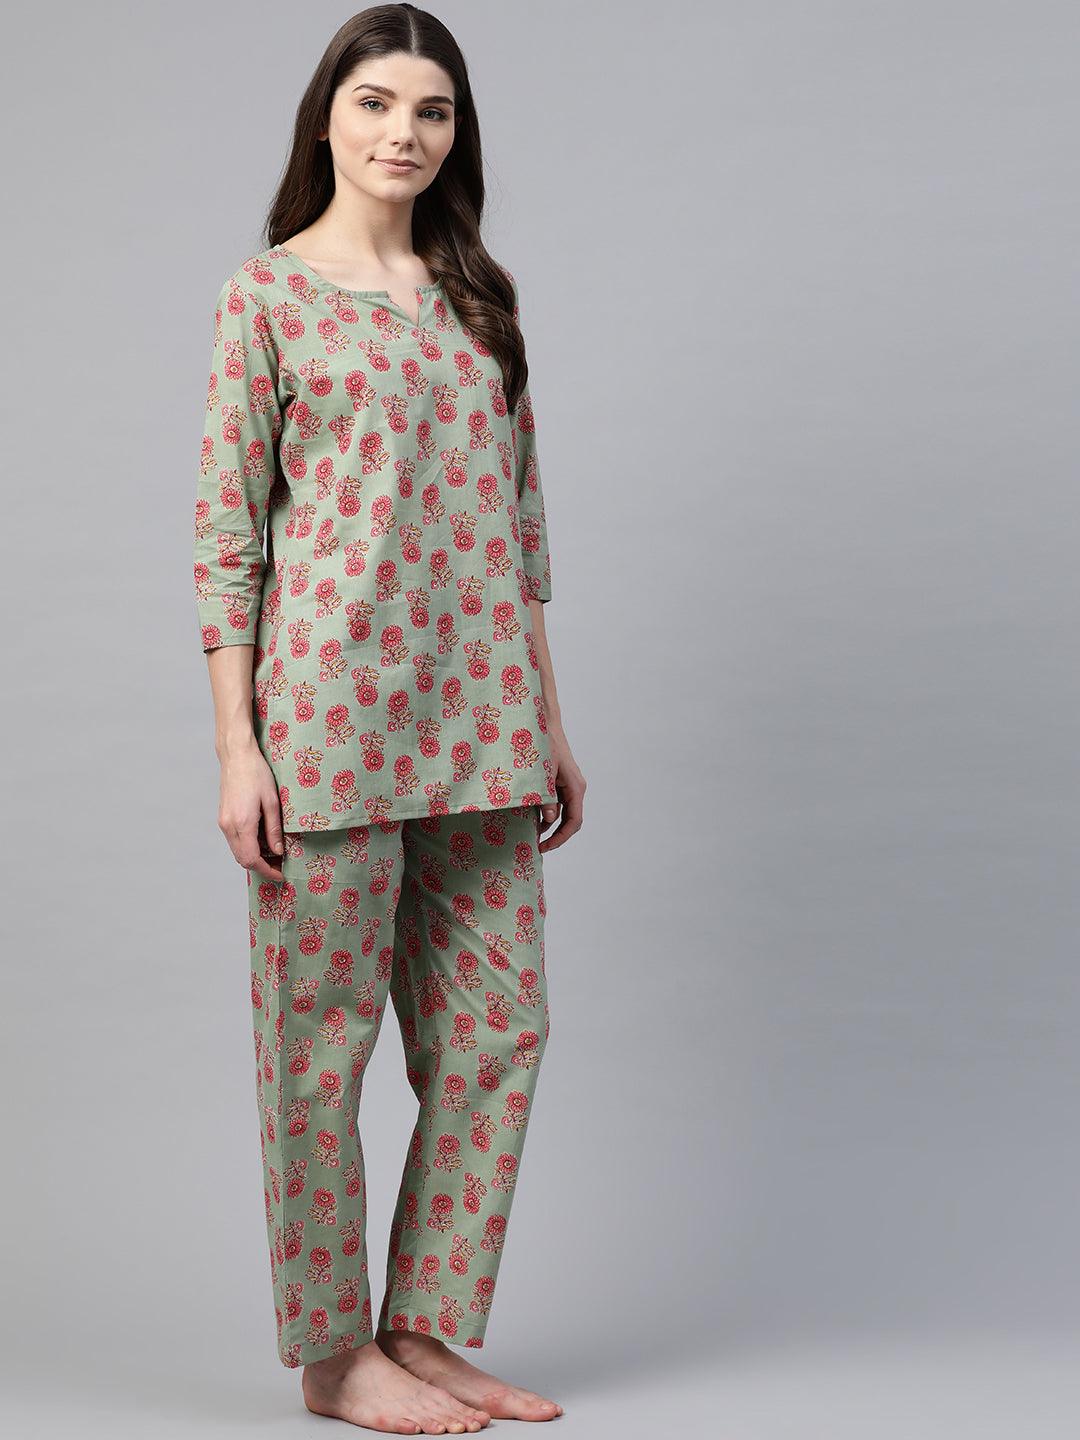 women's nightsuit, cotton, summer, pajama set, pyjama, loungewear, nightwear,  sleepwear, day wear, cotton sets – PiuSnooze